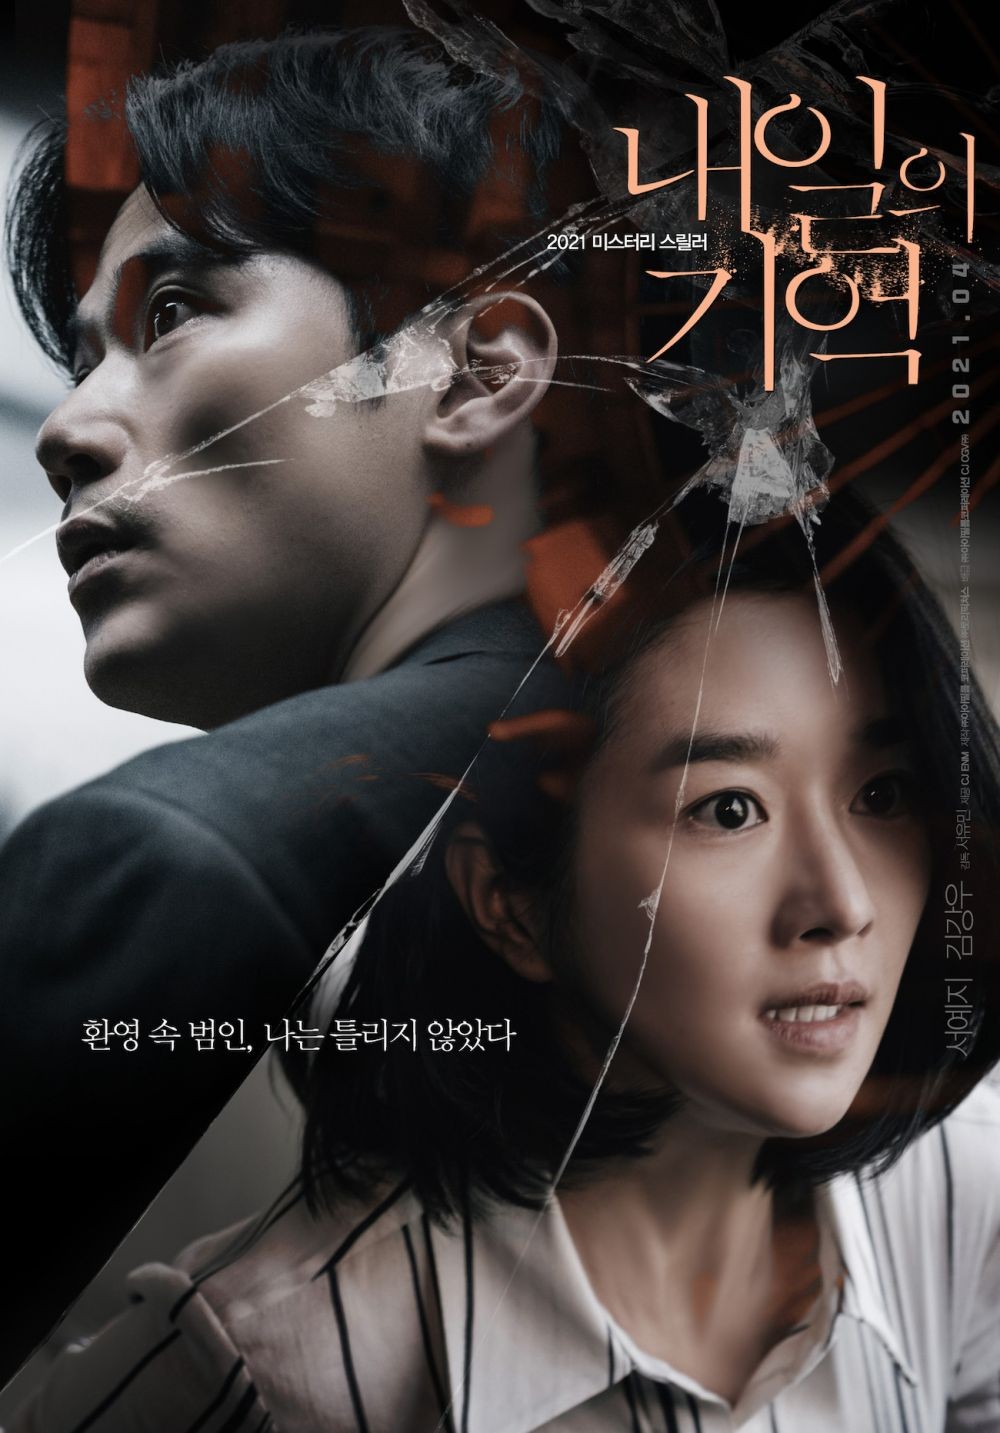 8 Rekomendasi Tontonan Korea di Bulan Juli 2021, Ada Drama hingga Film